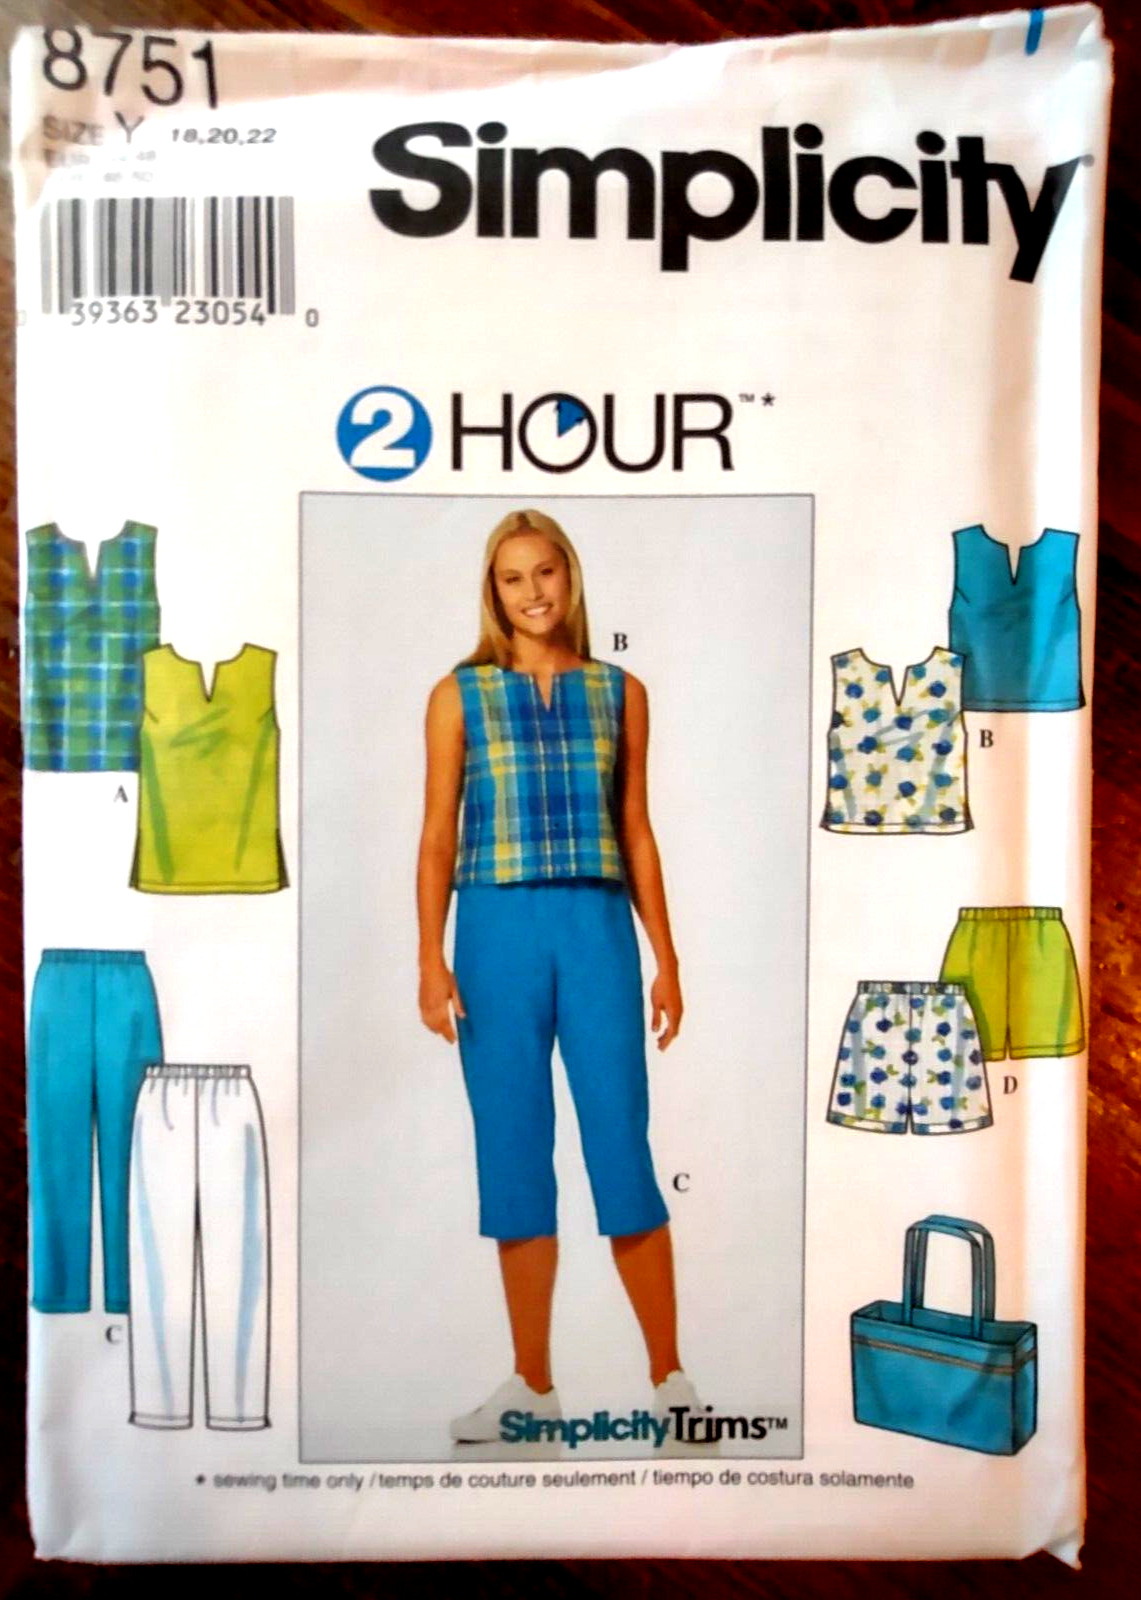 Simplicity 8751 Sz 18-22 Sewing Pattern UNCUT Top Pants Shorts Bag 1999 2-Hour